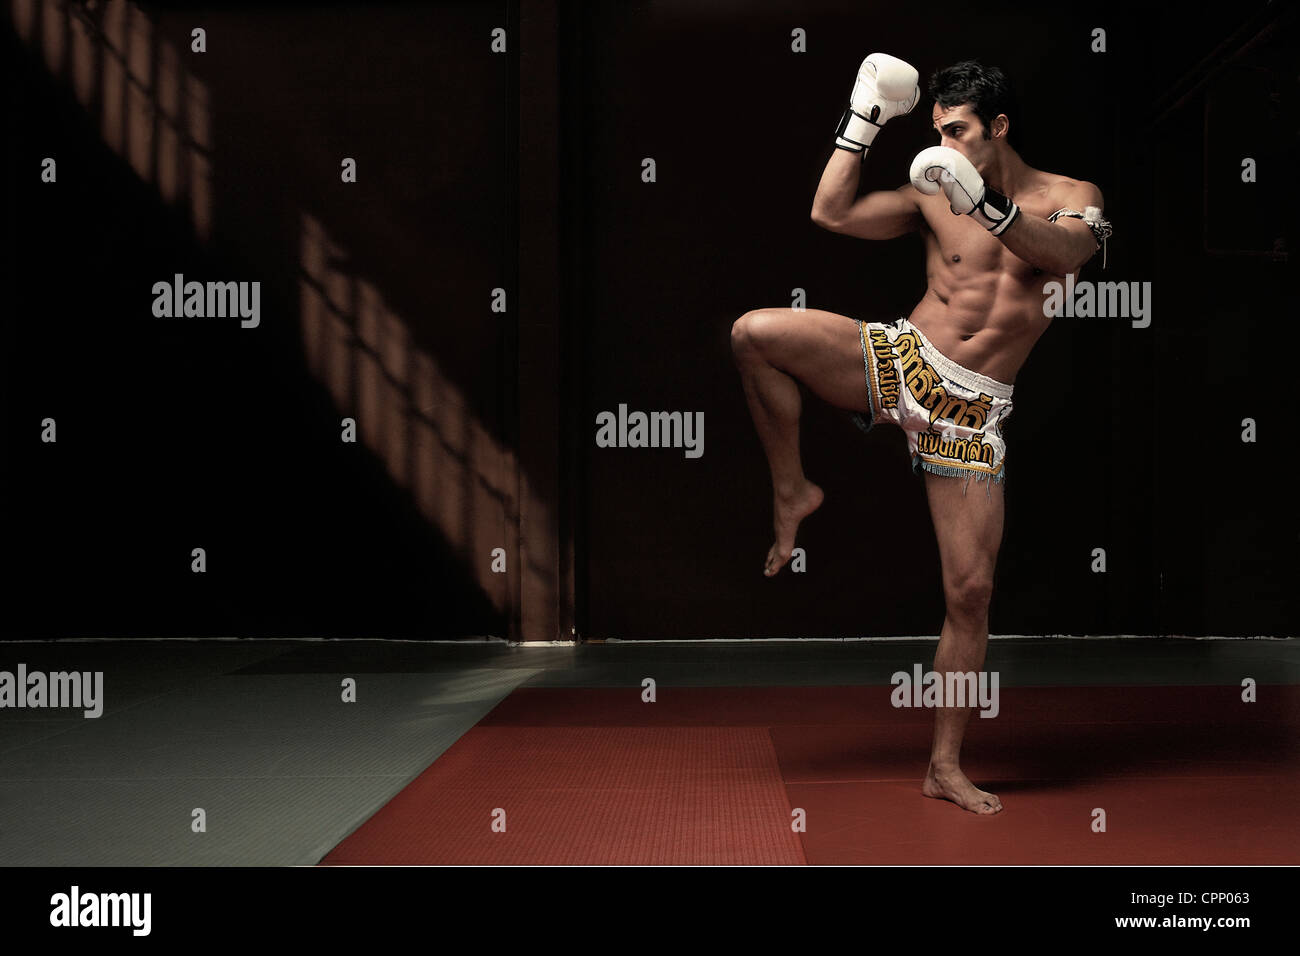 Boxer kicking on mat Stock Photo